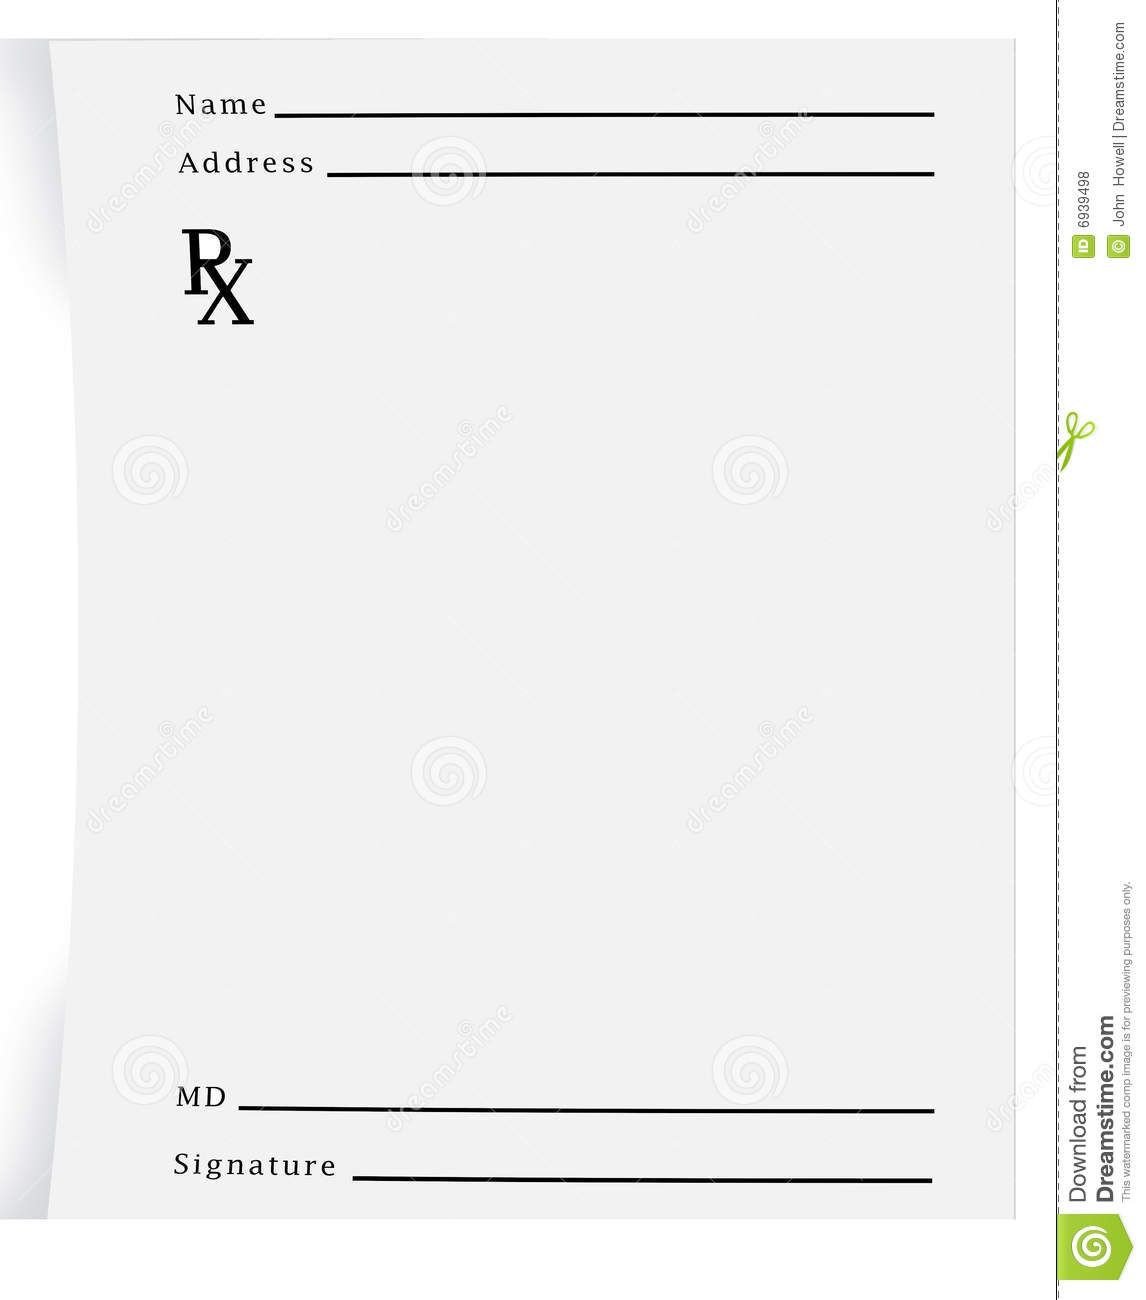 Prescription Pad Template Microsoft Word Prescription Pad Blank Download From Over 27 Million